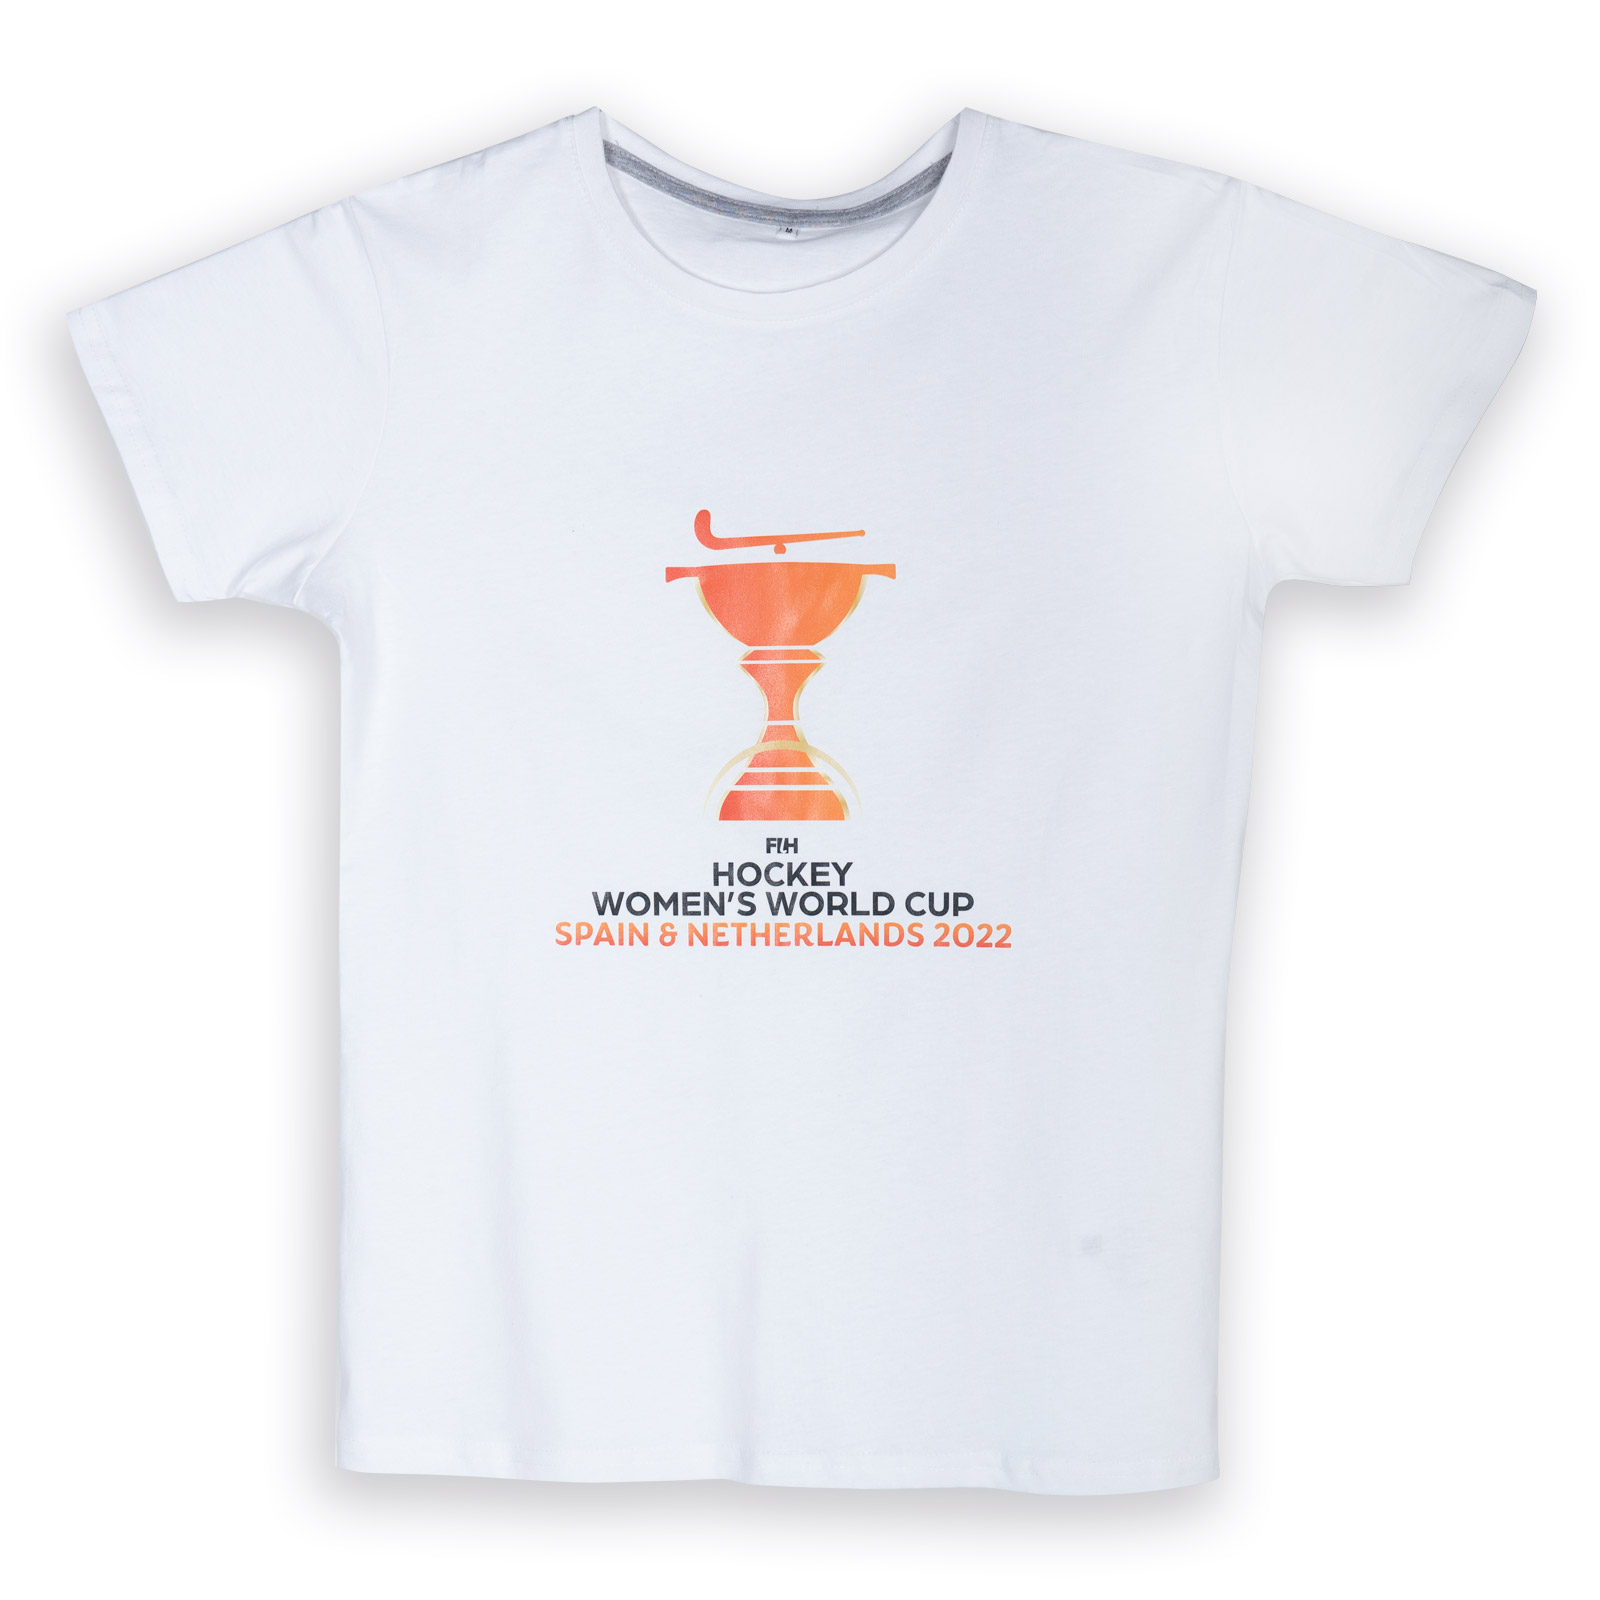 T-shirt ladies, white - Women's World Cup Spain & Netherlands 2022 